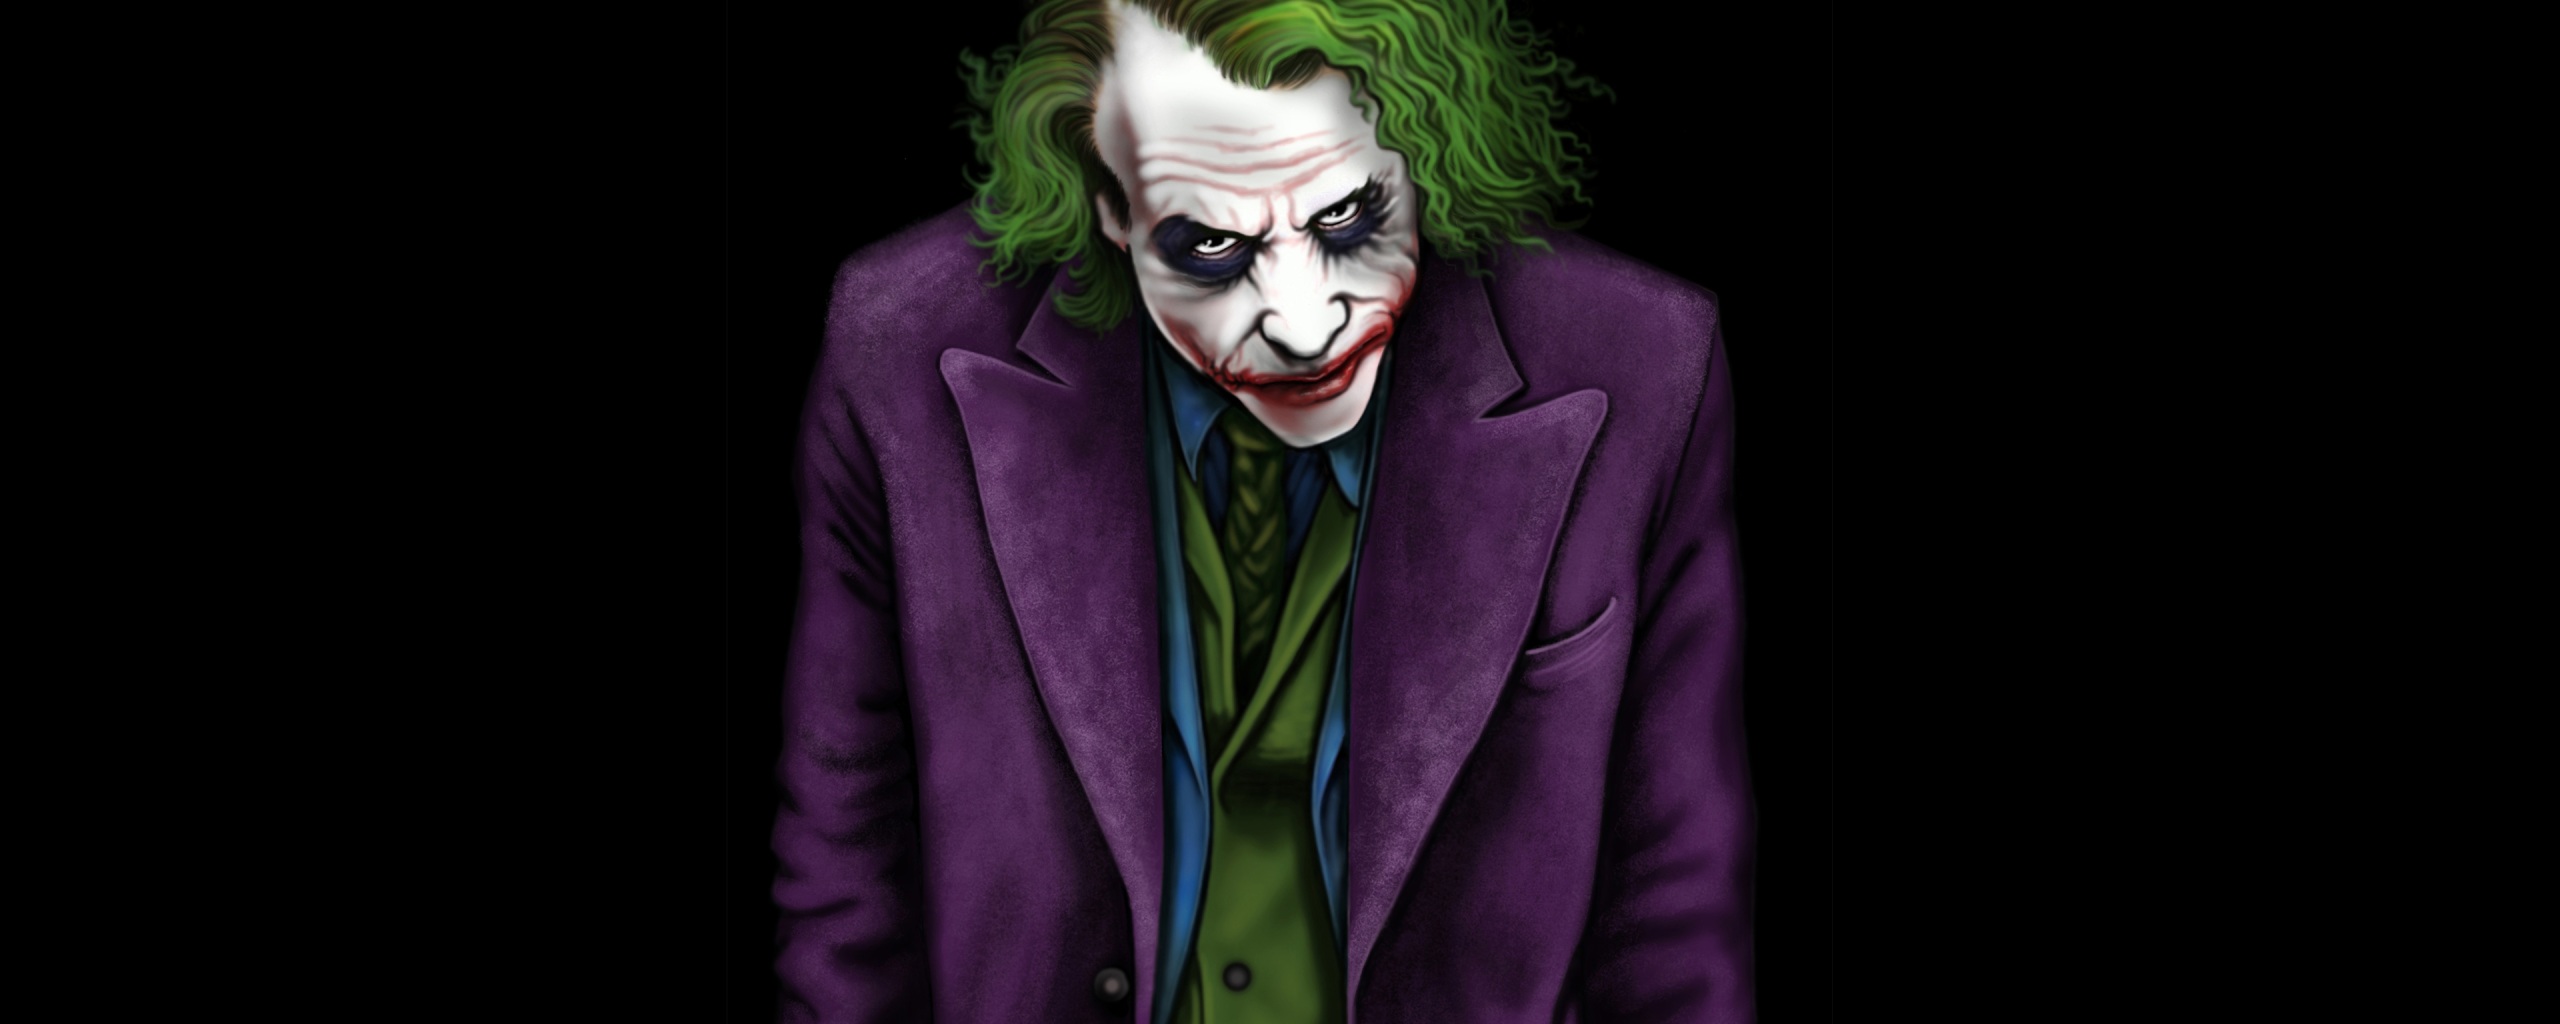 Joker Heath Ledger Artwork 4k - 4k Wallpapers - 40.000+ ipad wallpapers ...